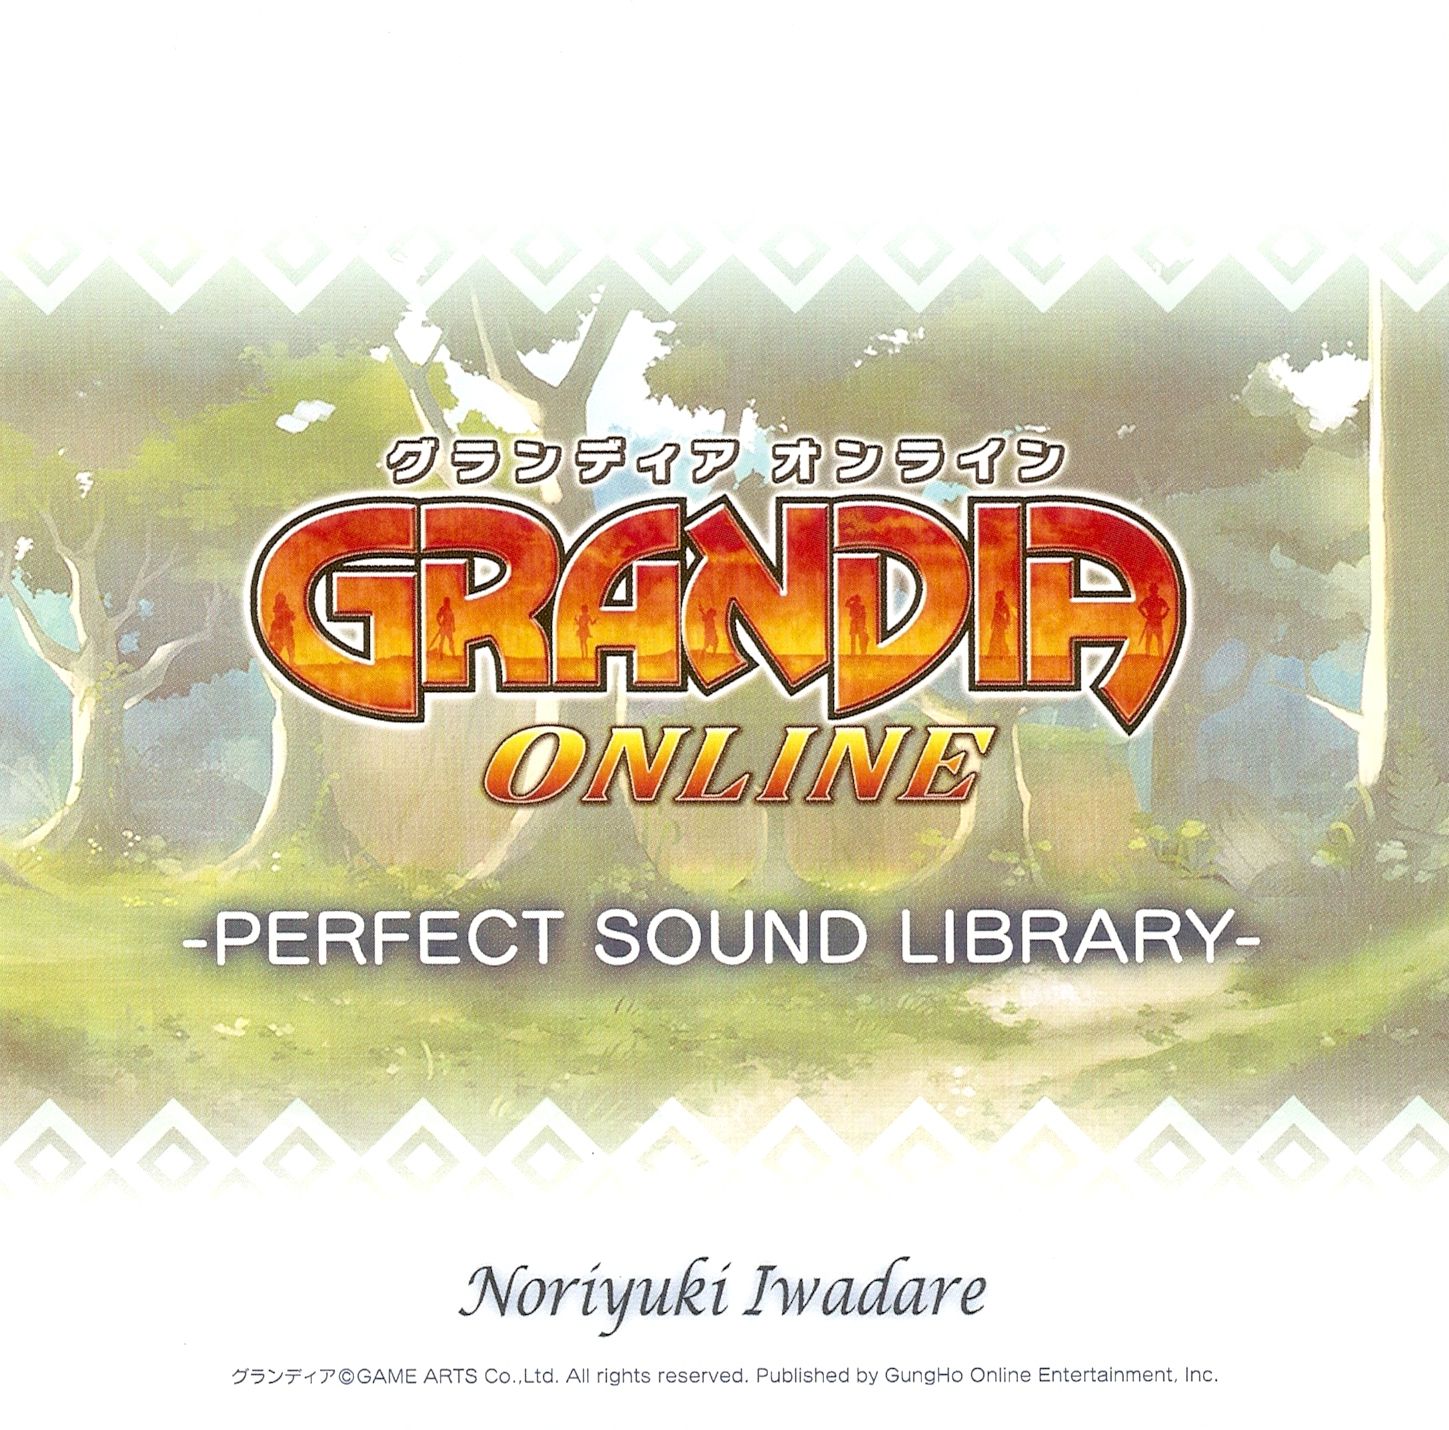 Grandia Online Front.jpg